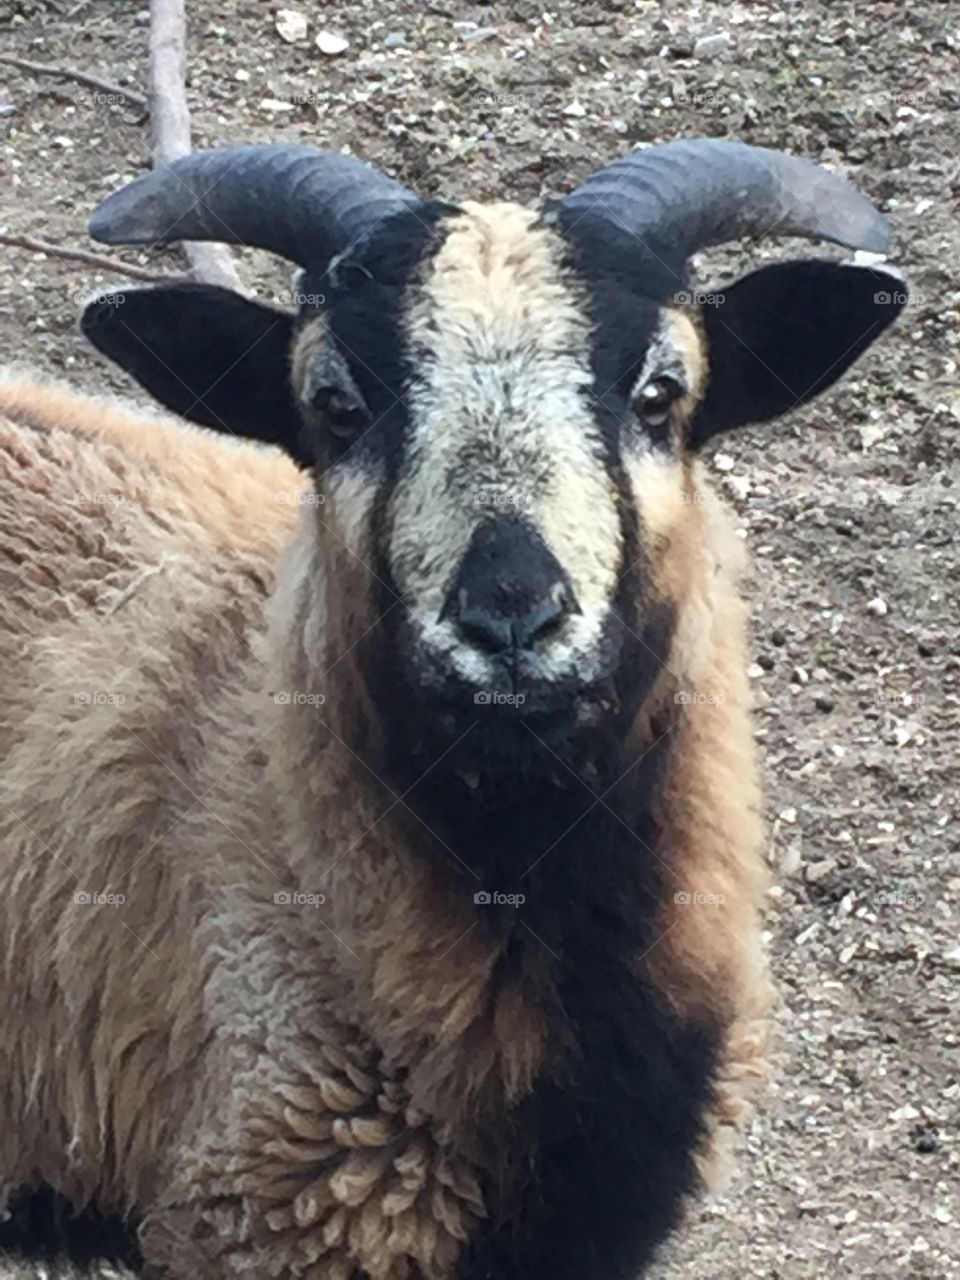 Mr. Goat - Close-Up